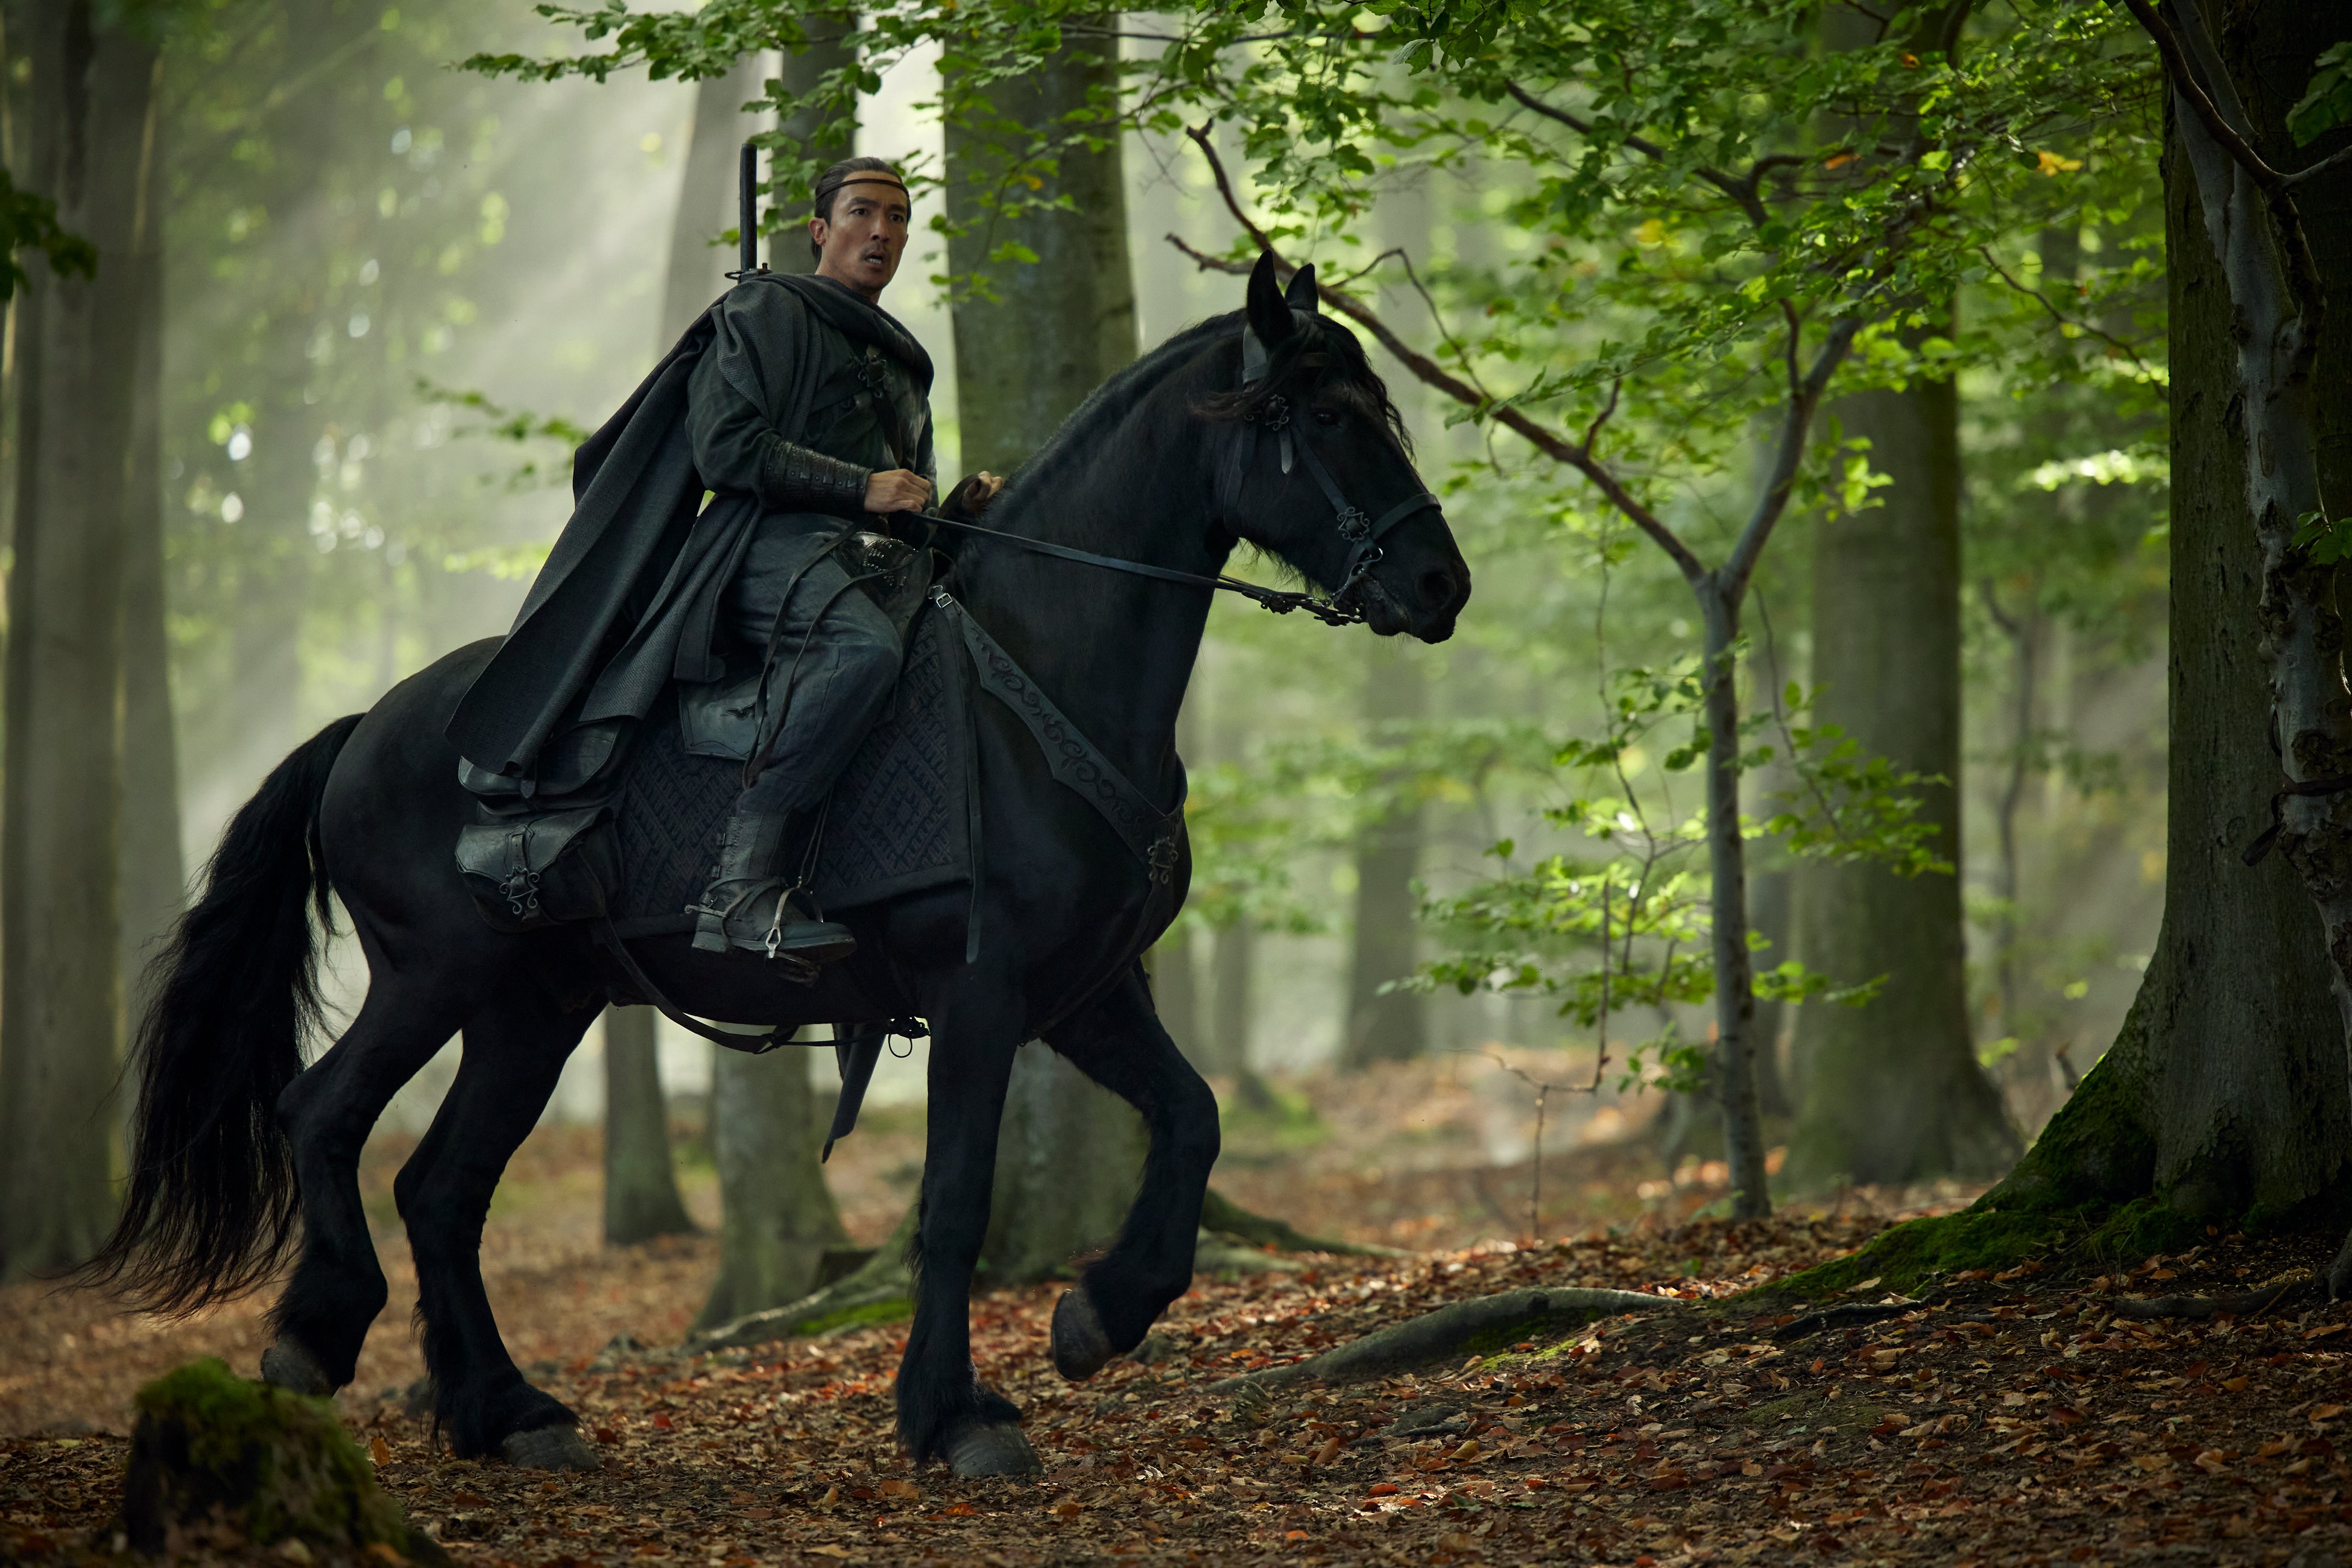 Full shot of Lan, riding a horse through the woods.